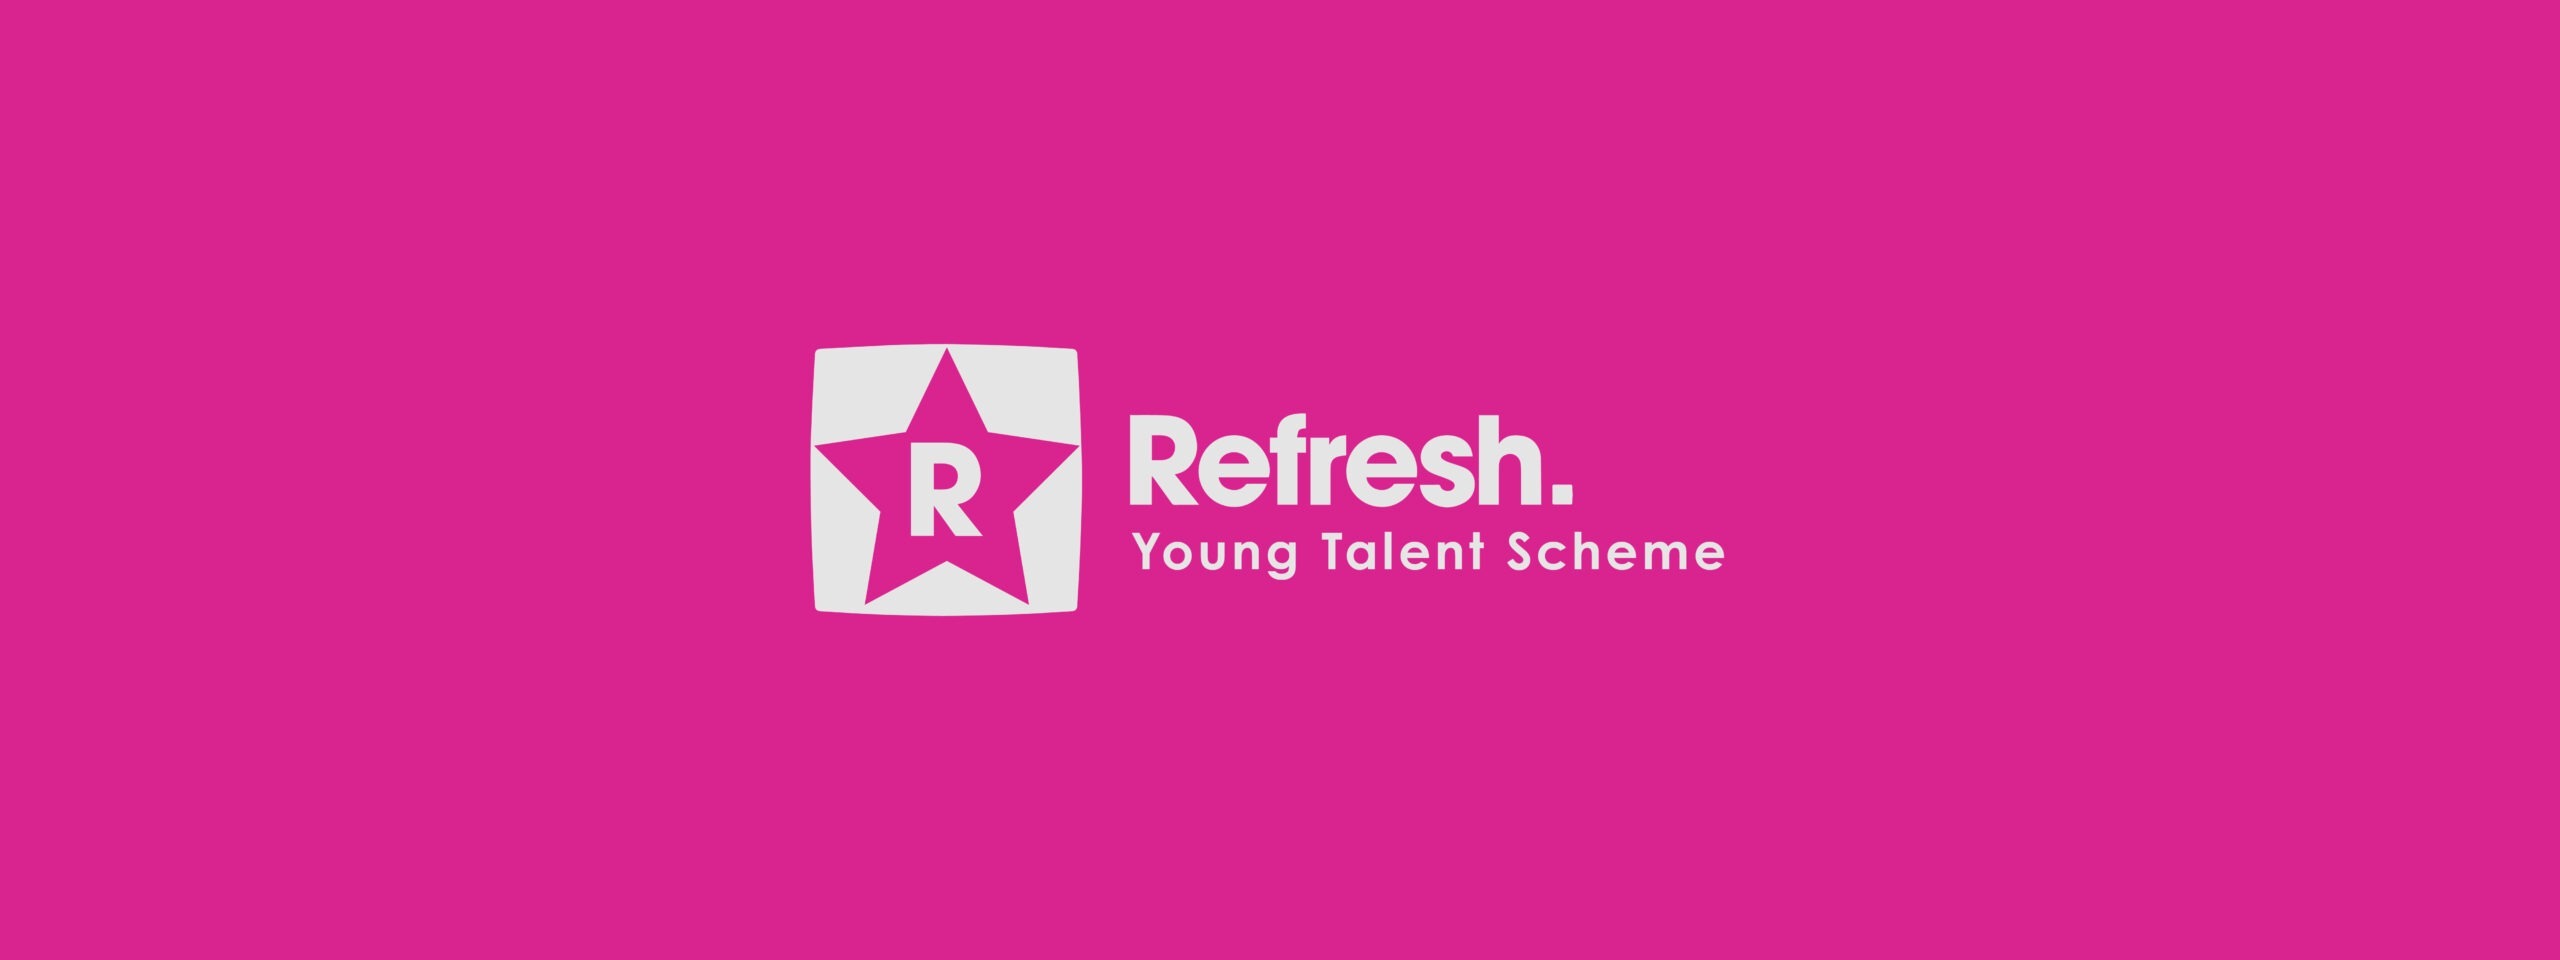 Young Talent Scheme